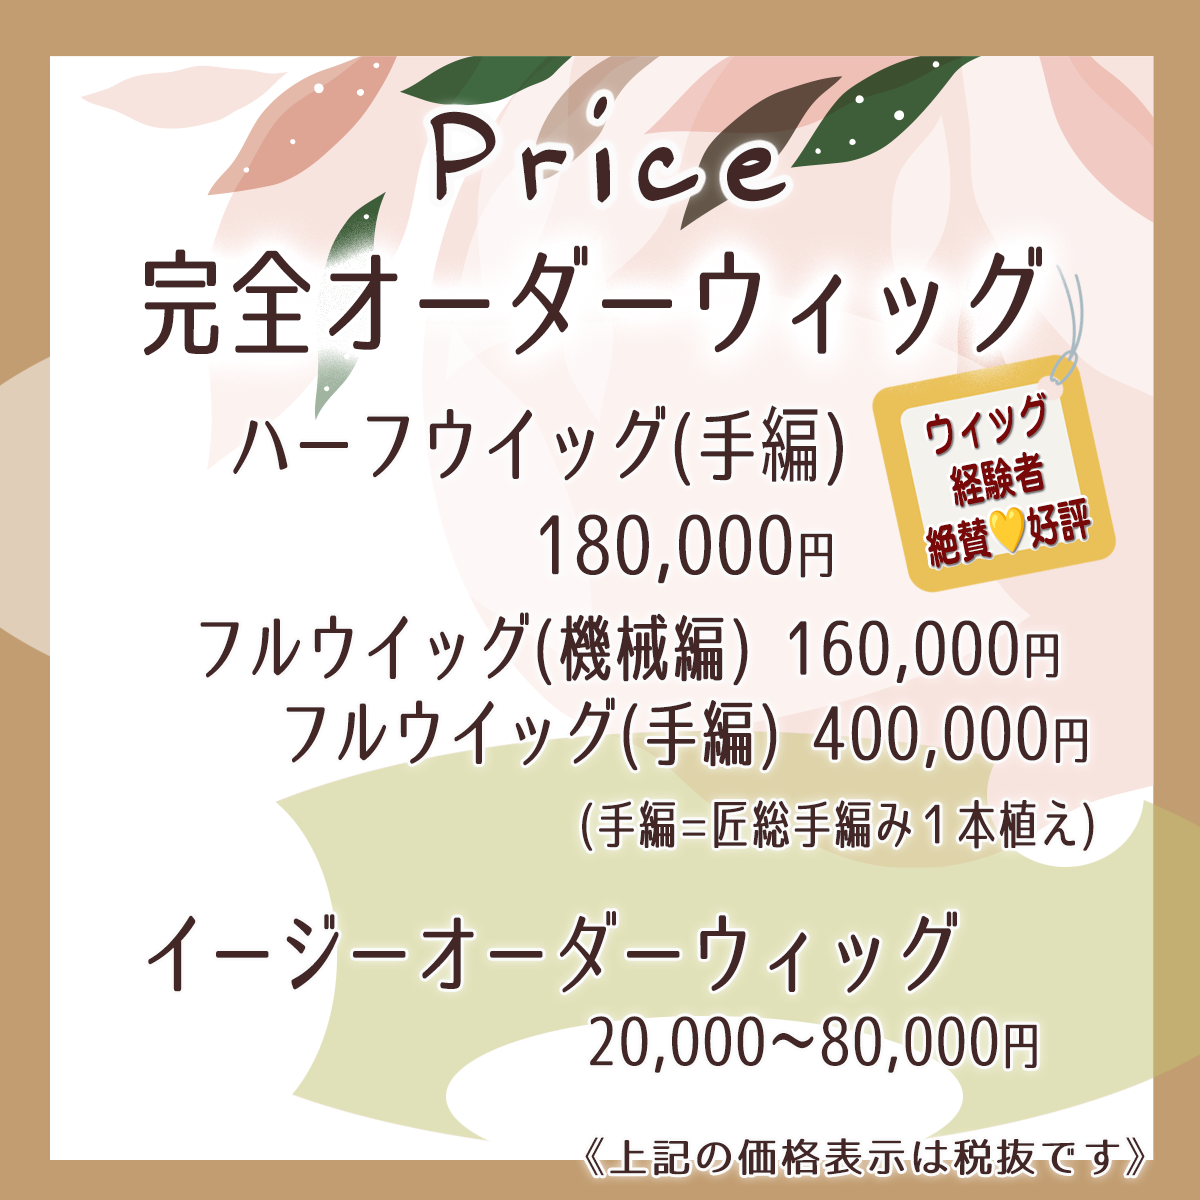 CIROの美髪ウイッグ 価格表です。総手編みハーフウィッグ18万円が大人気です！